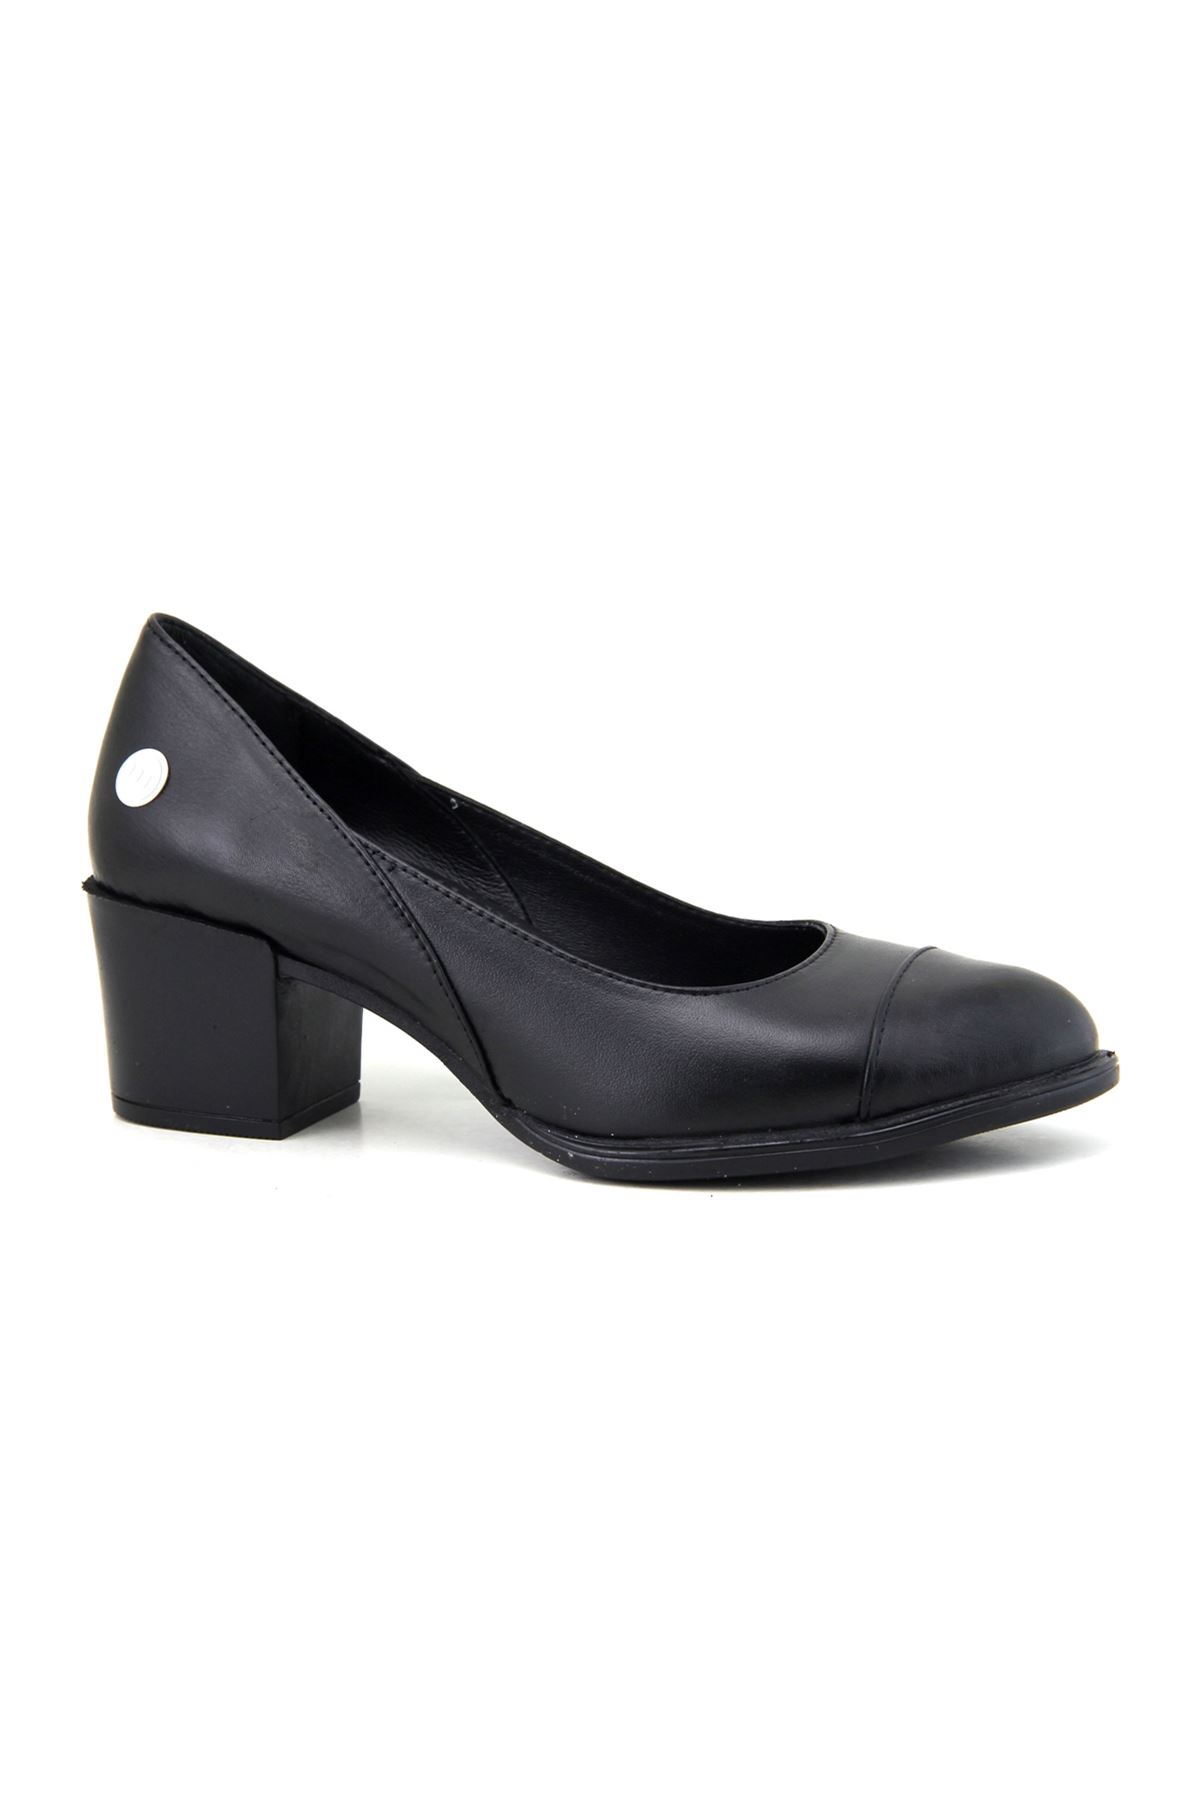 Mammamia D23YA-340 Hakiki Deri Kadın Ayakkabı - Siyah